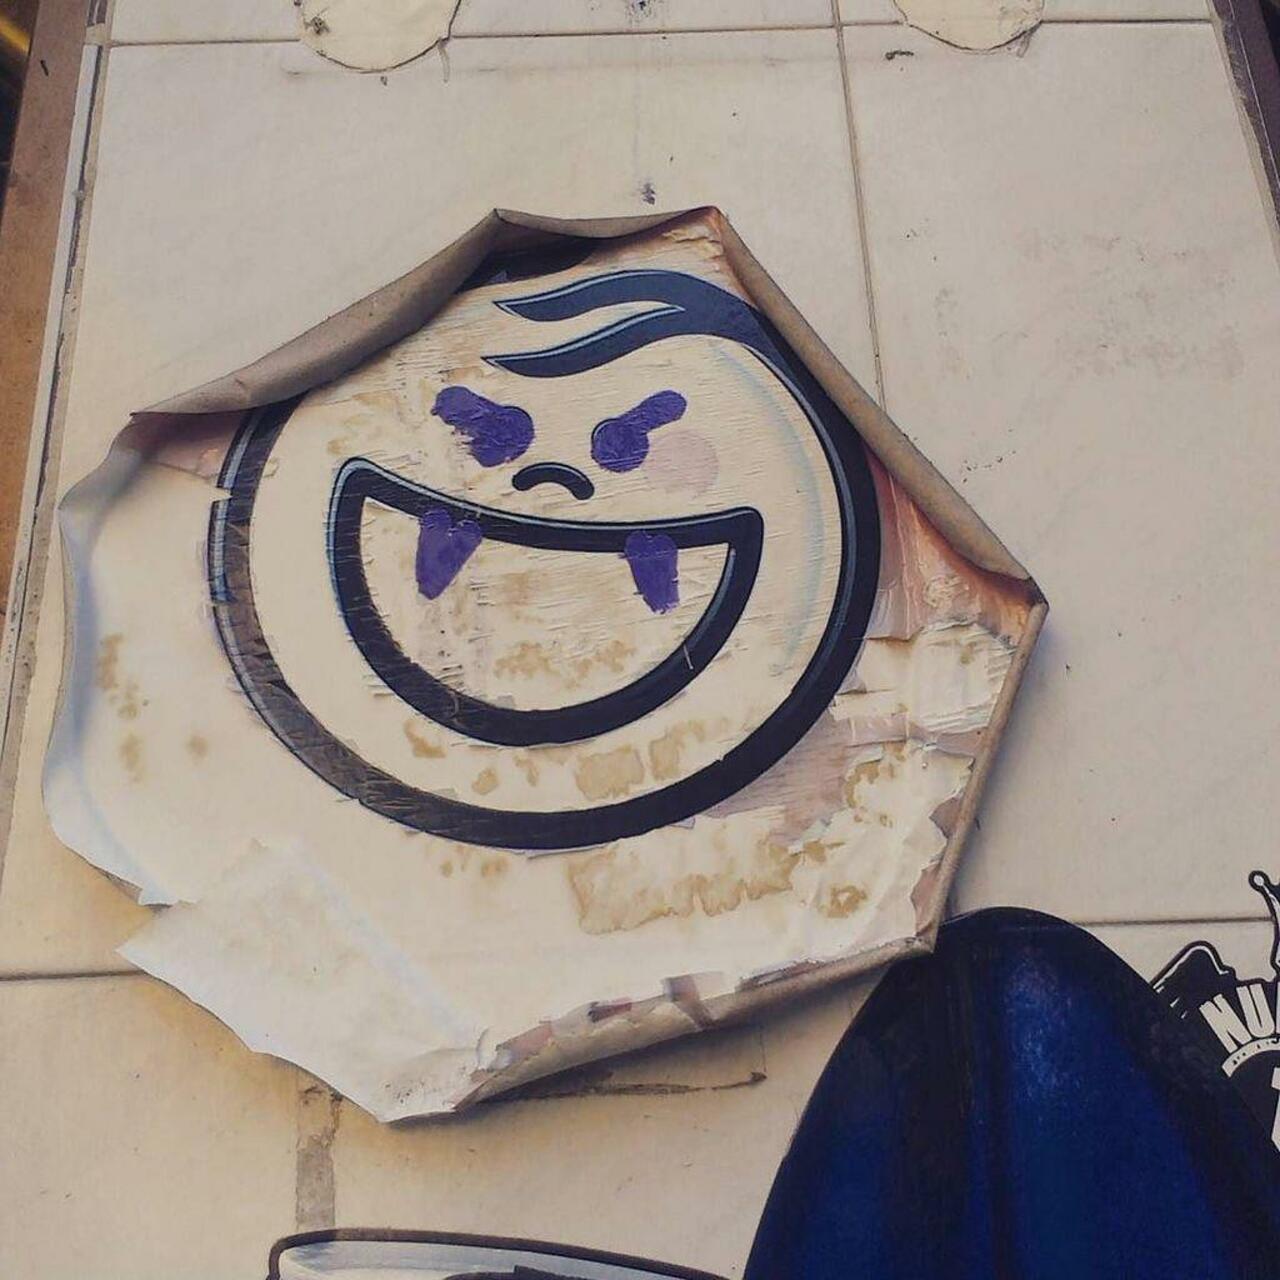 Now we know why he was always smiling #VampireMatutano #StreetArtMadrid #StreetArt #UrbanArt #Graffiti #ArteUrbano … http://t.co/F2cBSMH5JB